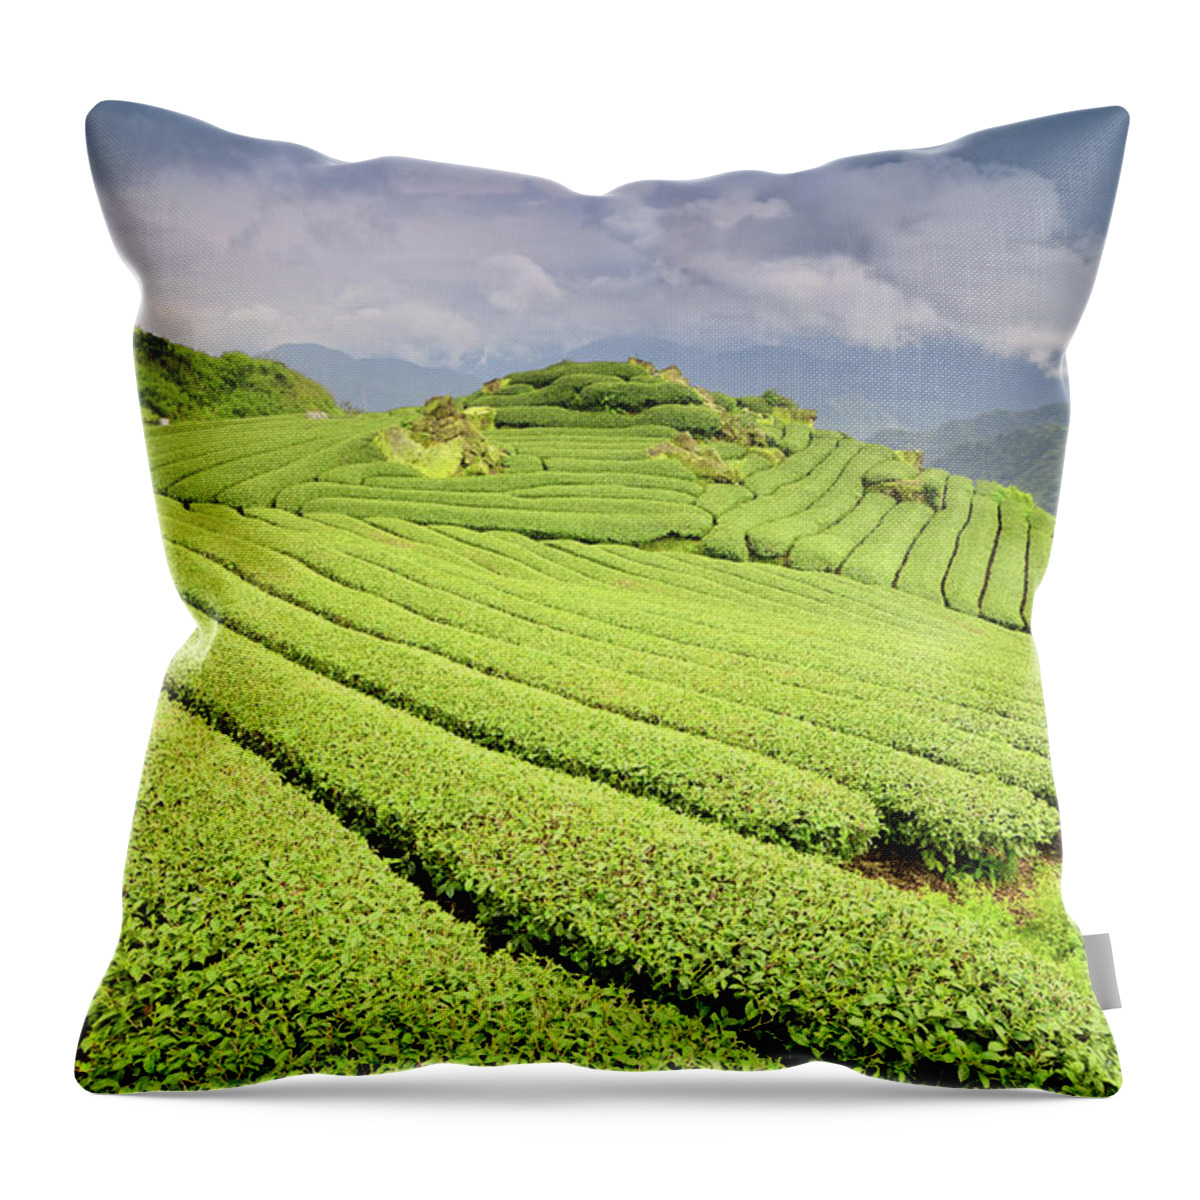 Taiwan Throw Pillow featuring the photograph Tea Plantation by Joyoyo Chen